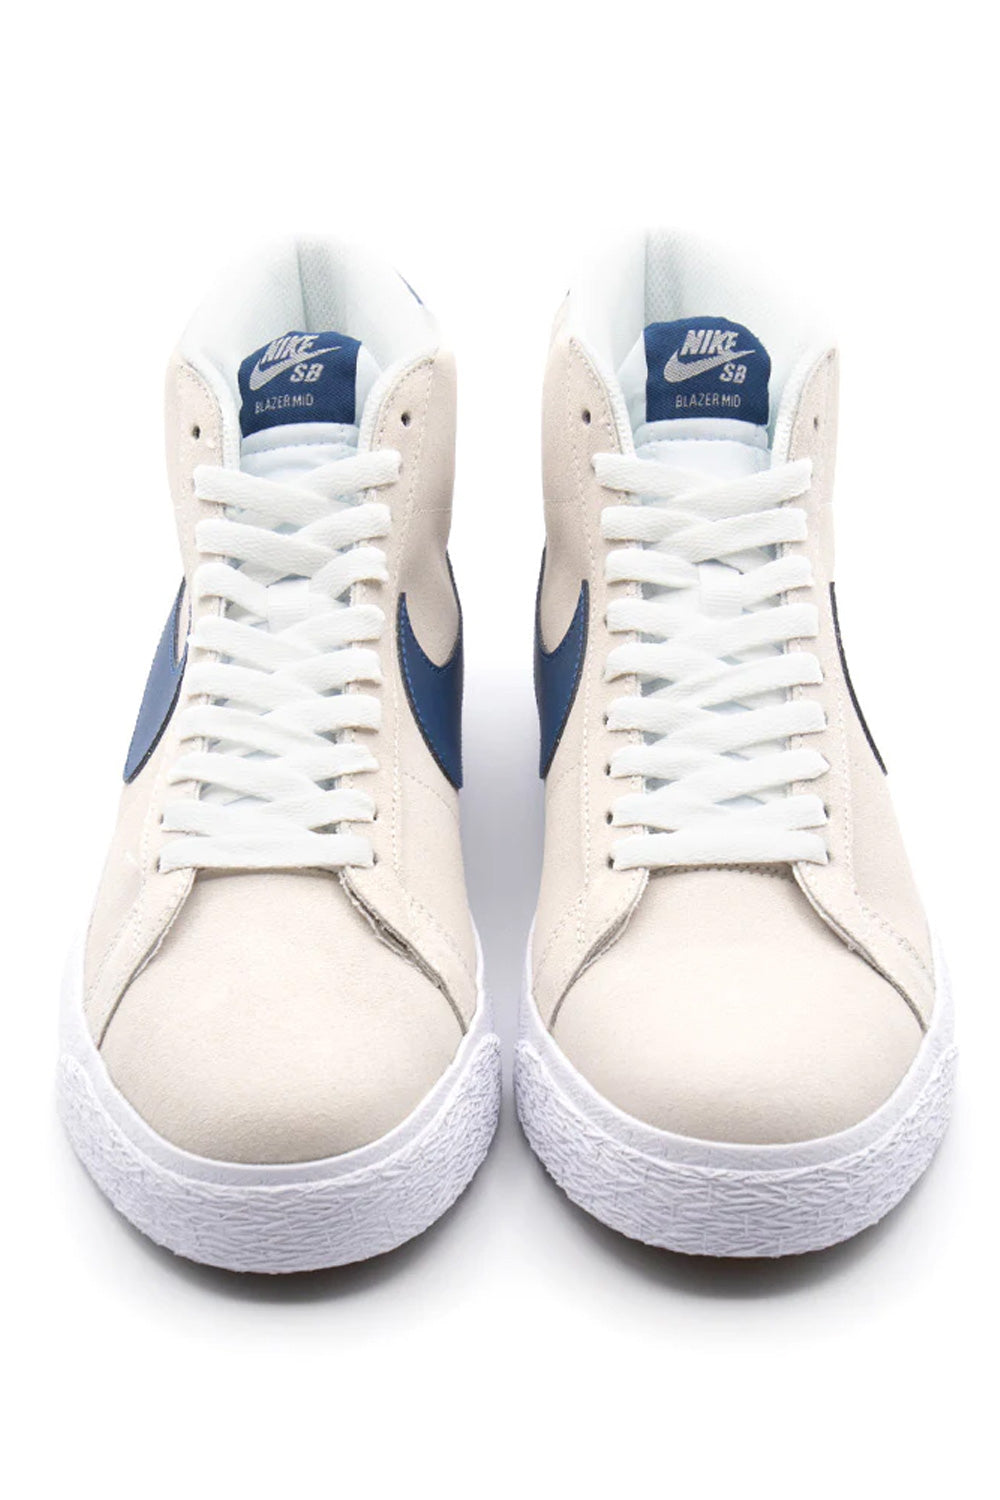 Nike SB Zoom Blazer Mid Shoe White / Court Blue / White / White - BONKERS